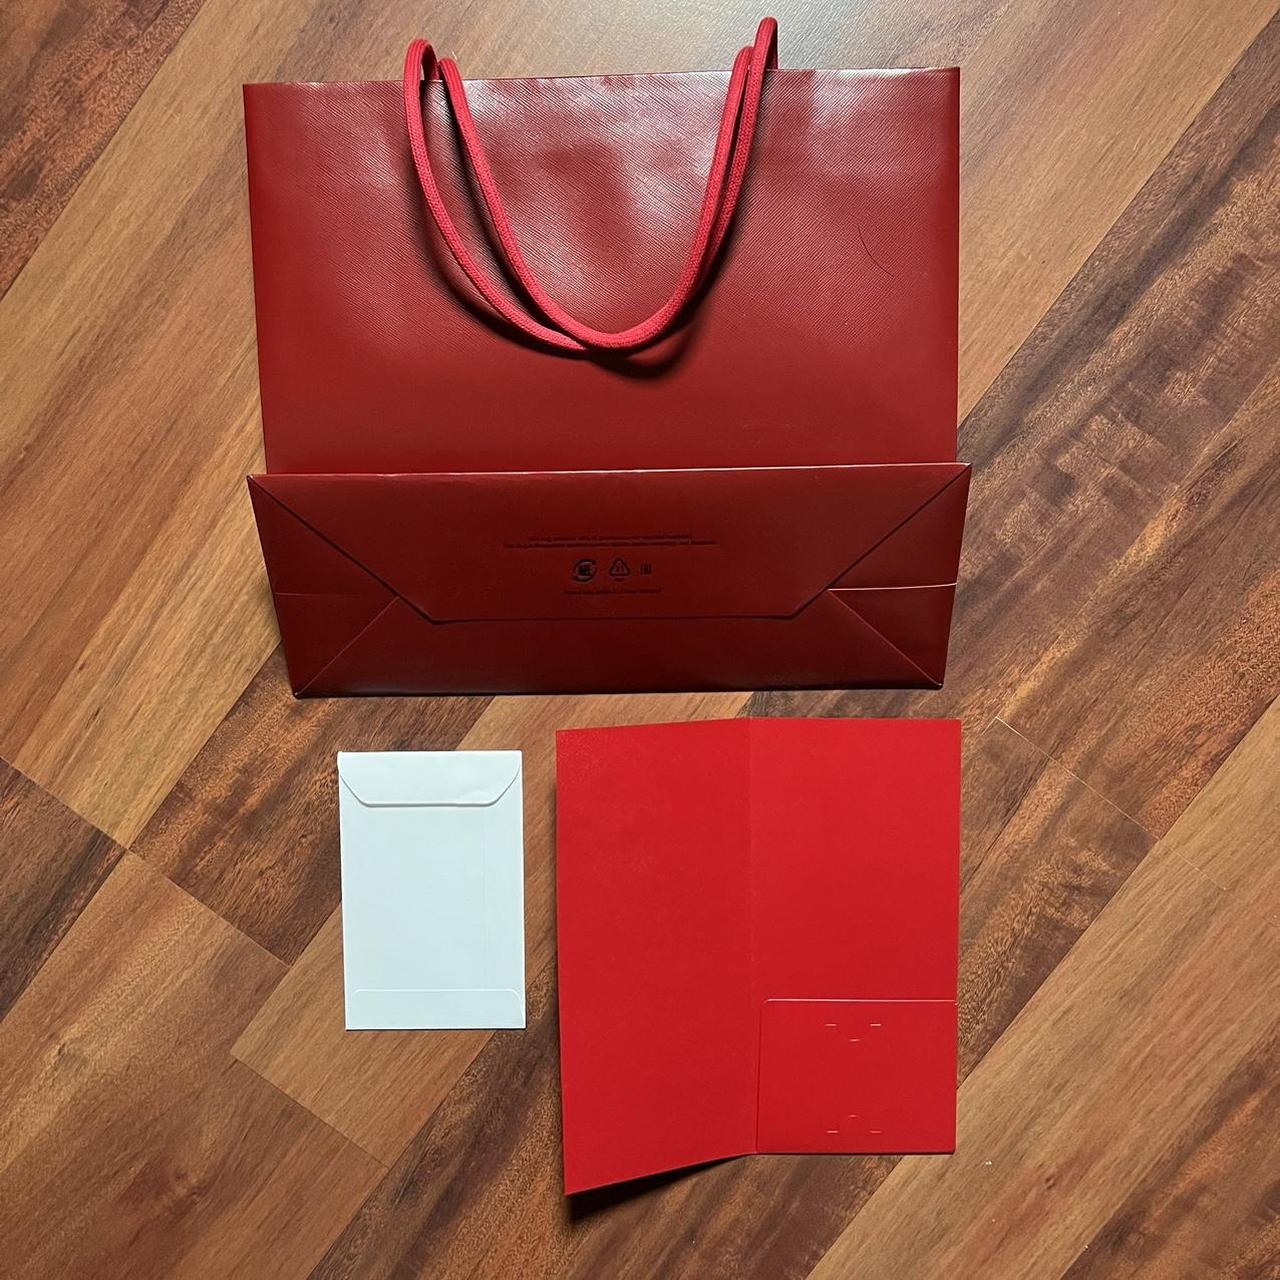 [※ Outlet ※] Cartier Cartier shop bag shopper 1 piece A set red hand-held  shop bag sub bag wrapping gift bag brand mail order utilization usage paper